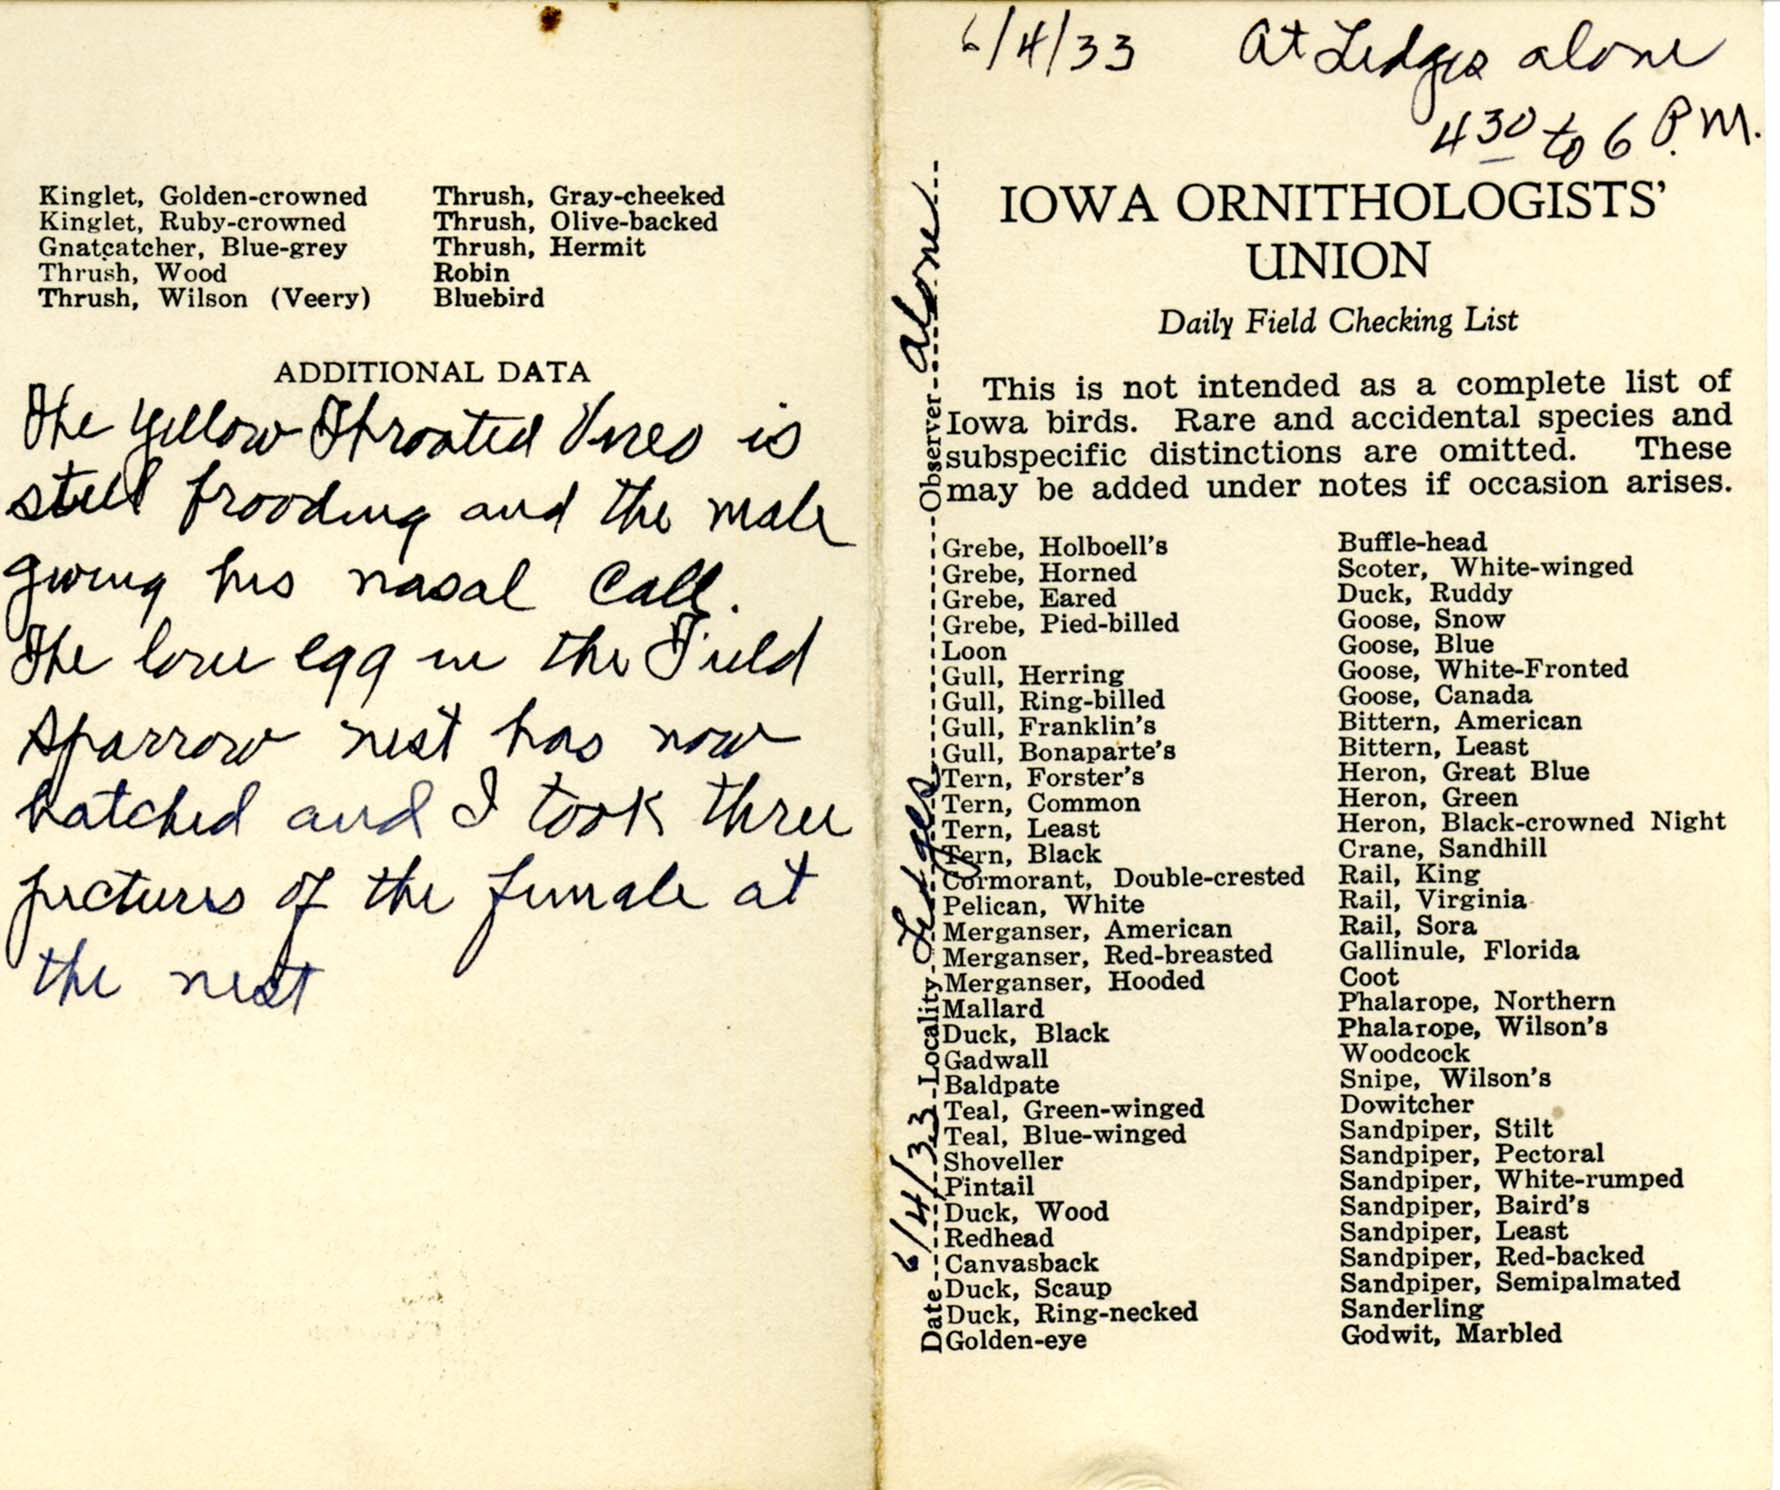 Daily field checking list, Walter Rosene, June 4, 1933 second trip